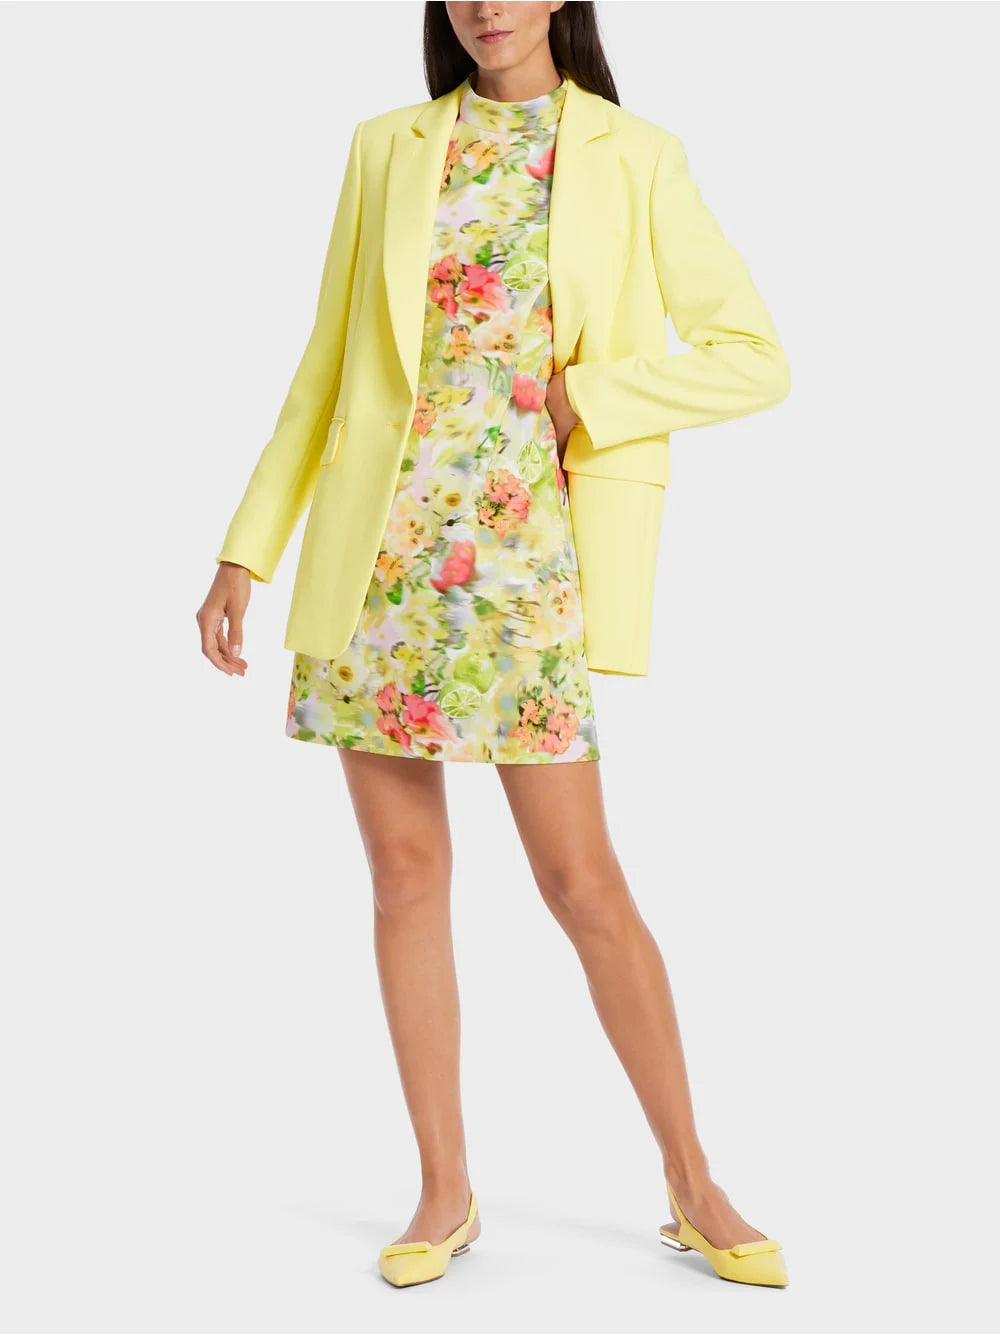 Blurry Lemons Print Dress in Pale Lemon